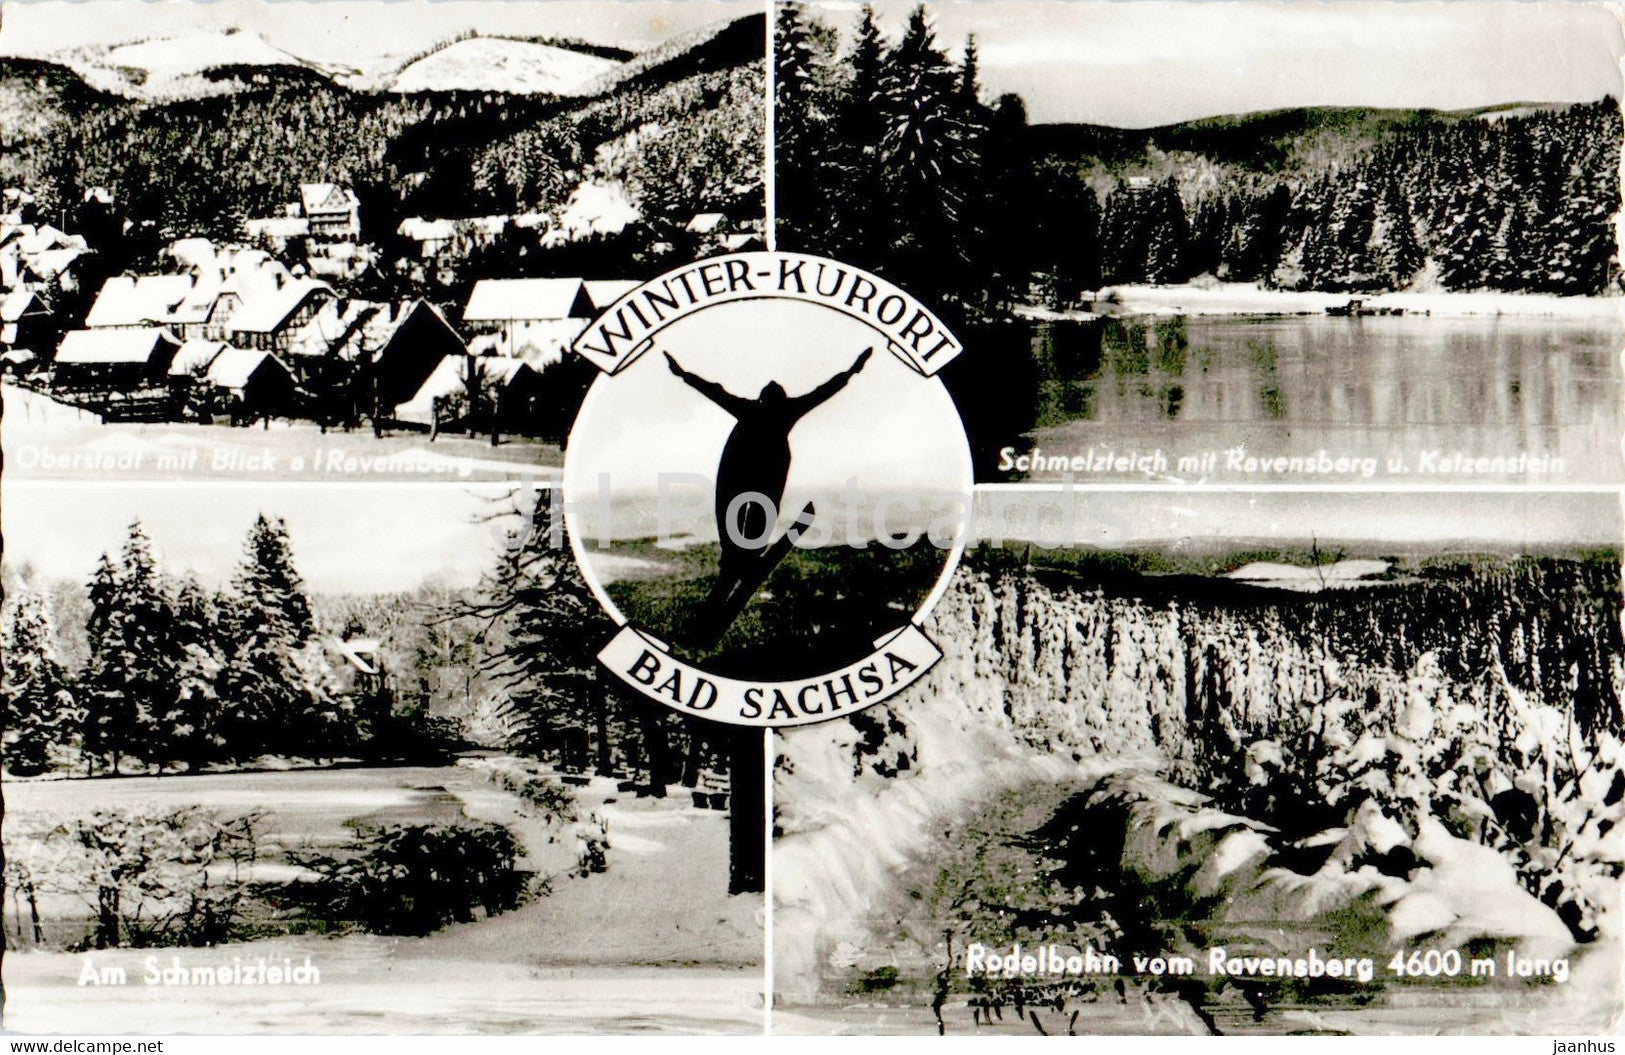 Winterkurort Bad Sachsa - Oberstadt - Schmeitzteich - ski jumping - old postcard - Germany - used - JH Postcards